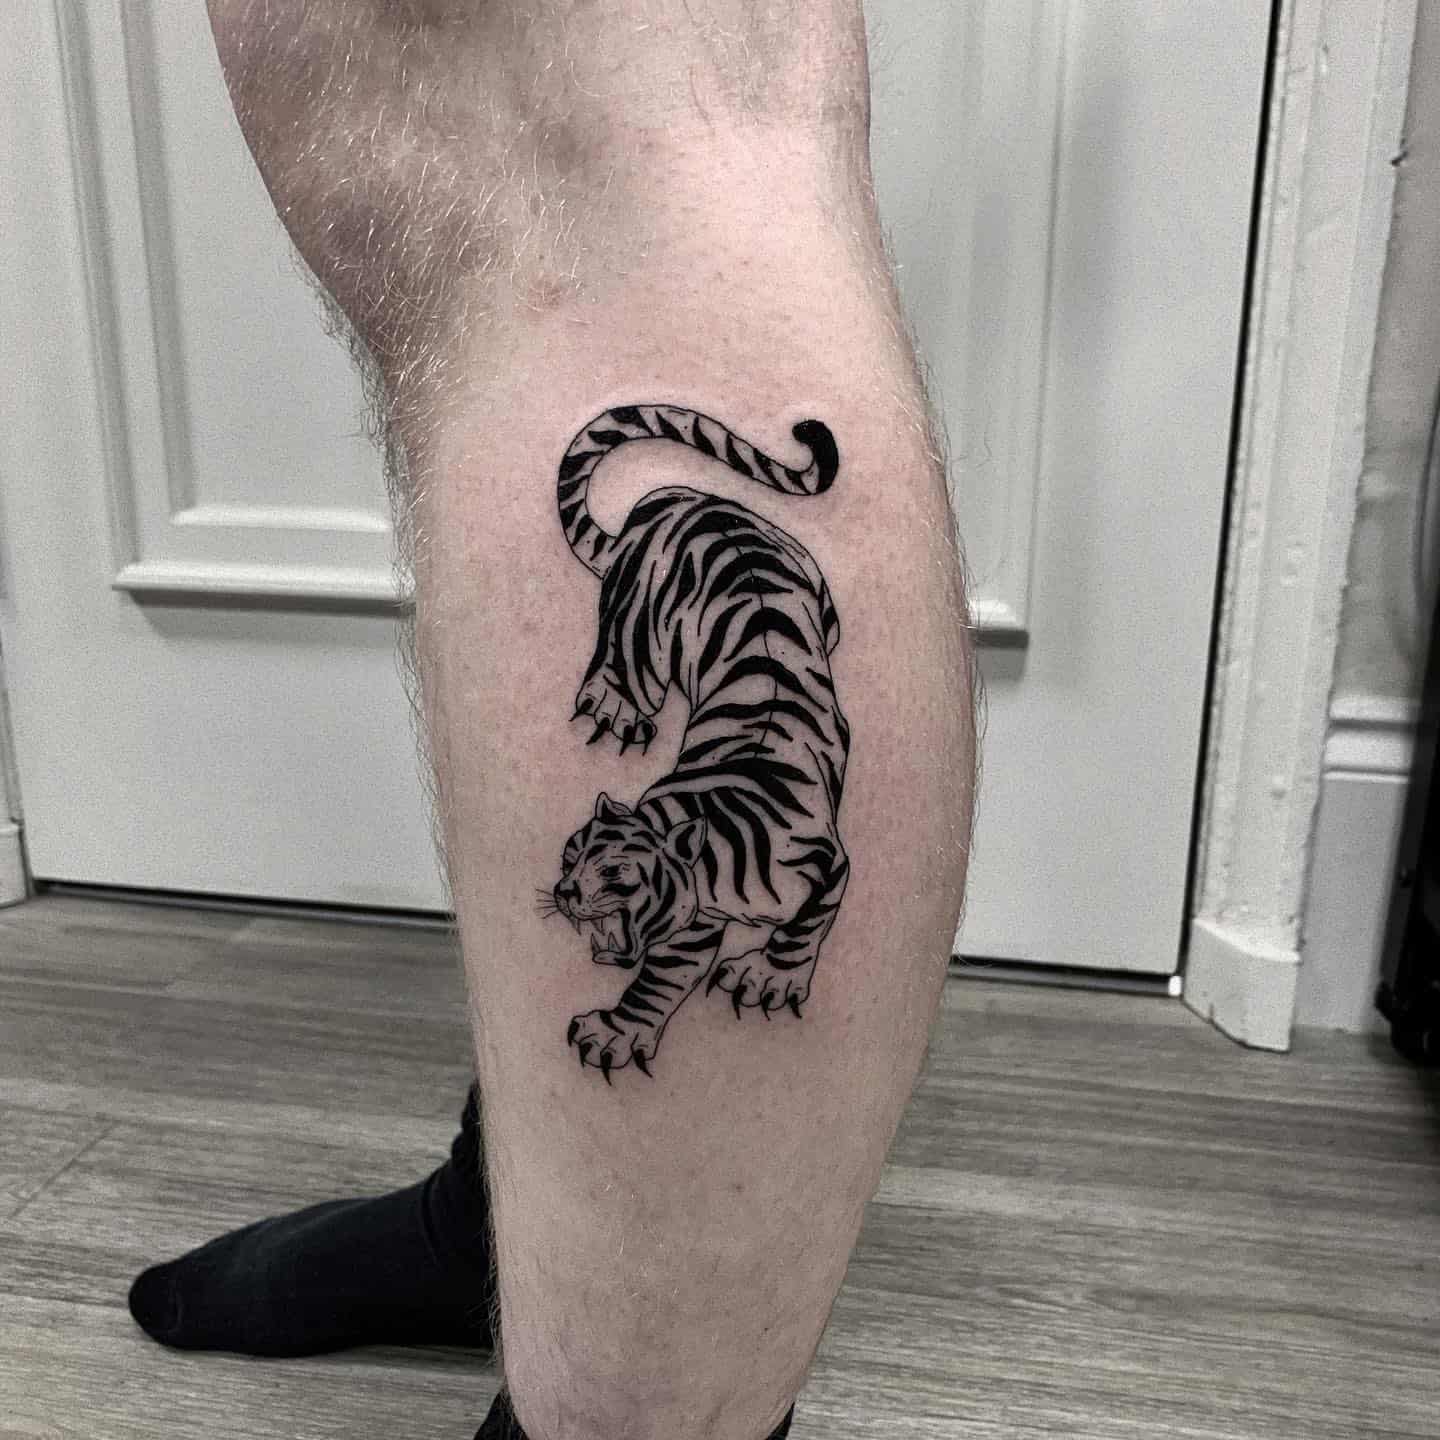 Tiger tattoo on leg by somestattoo